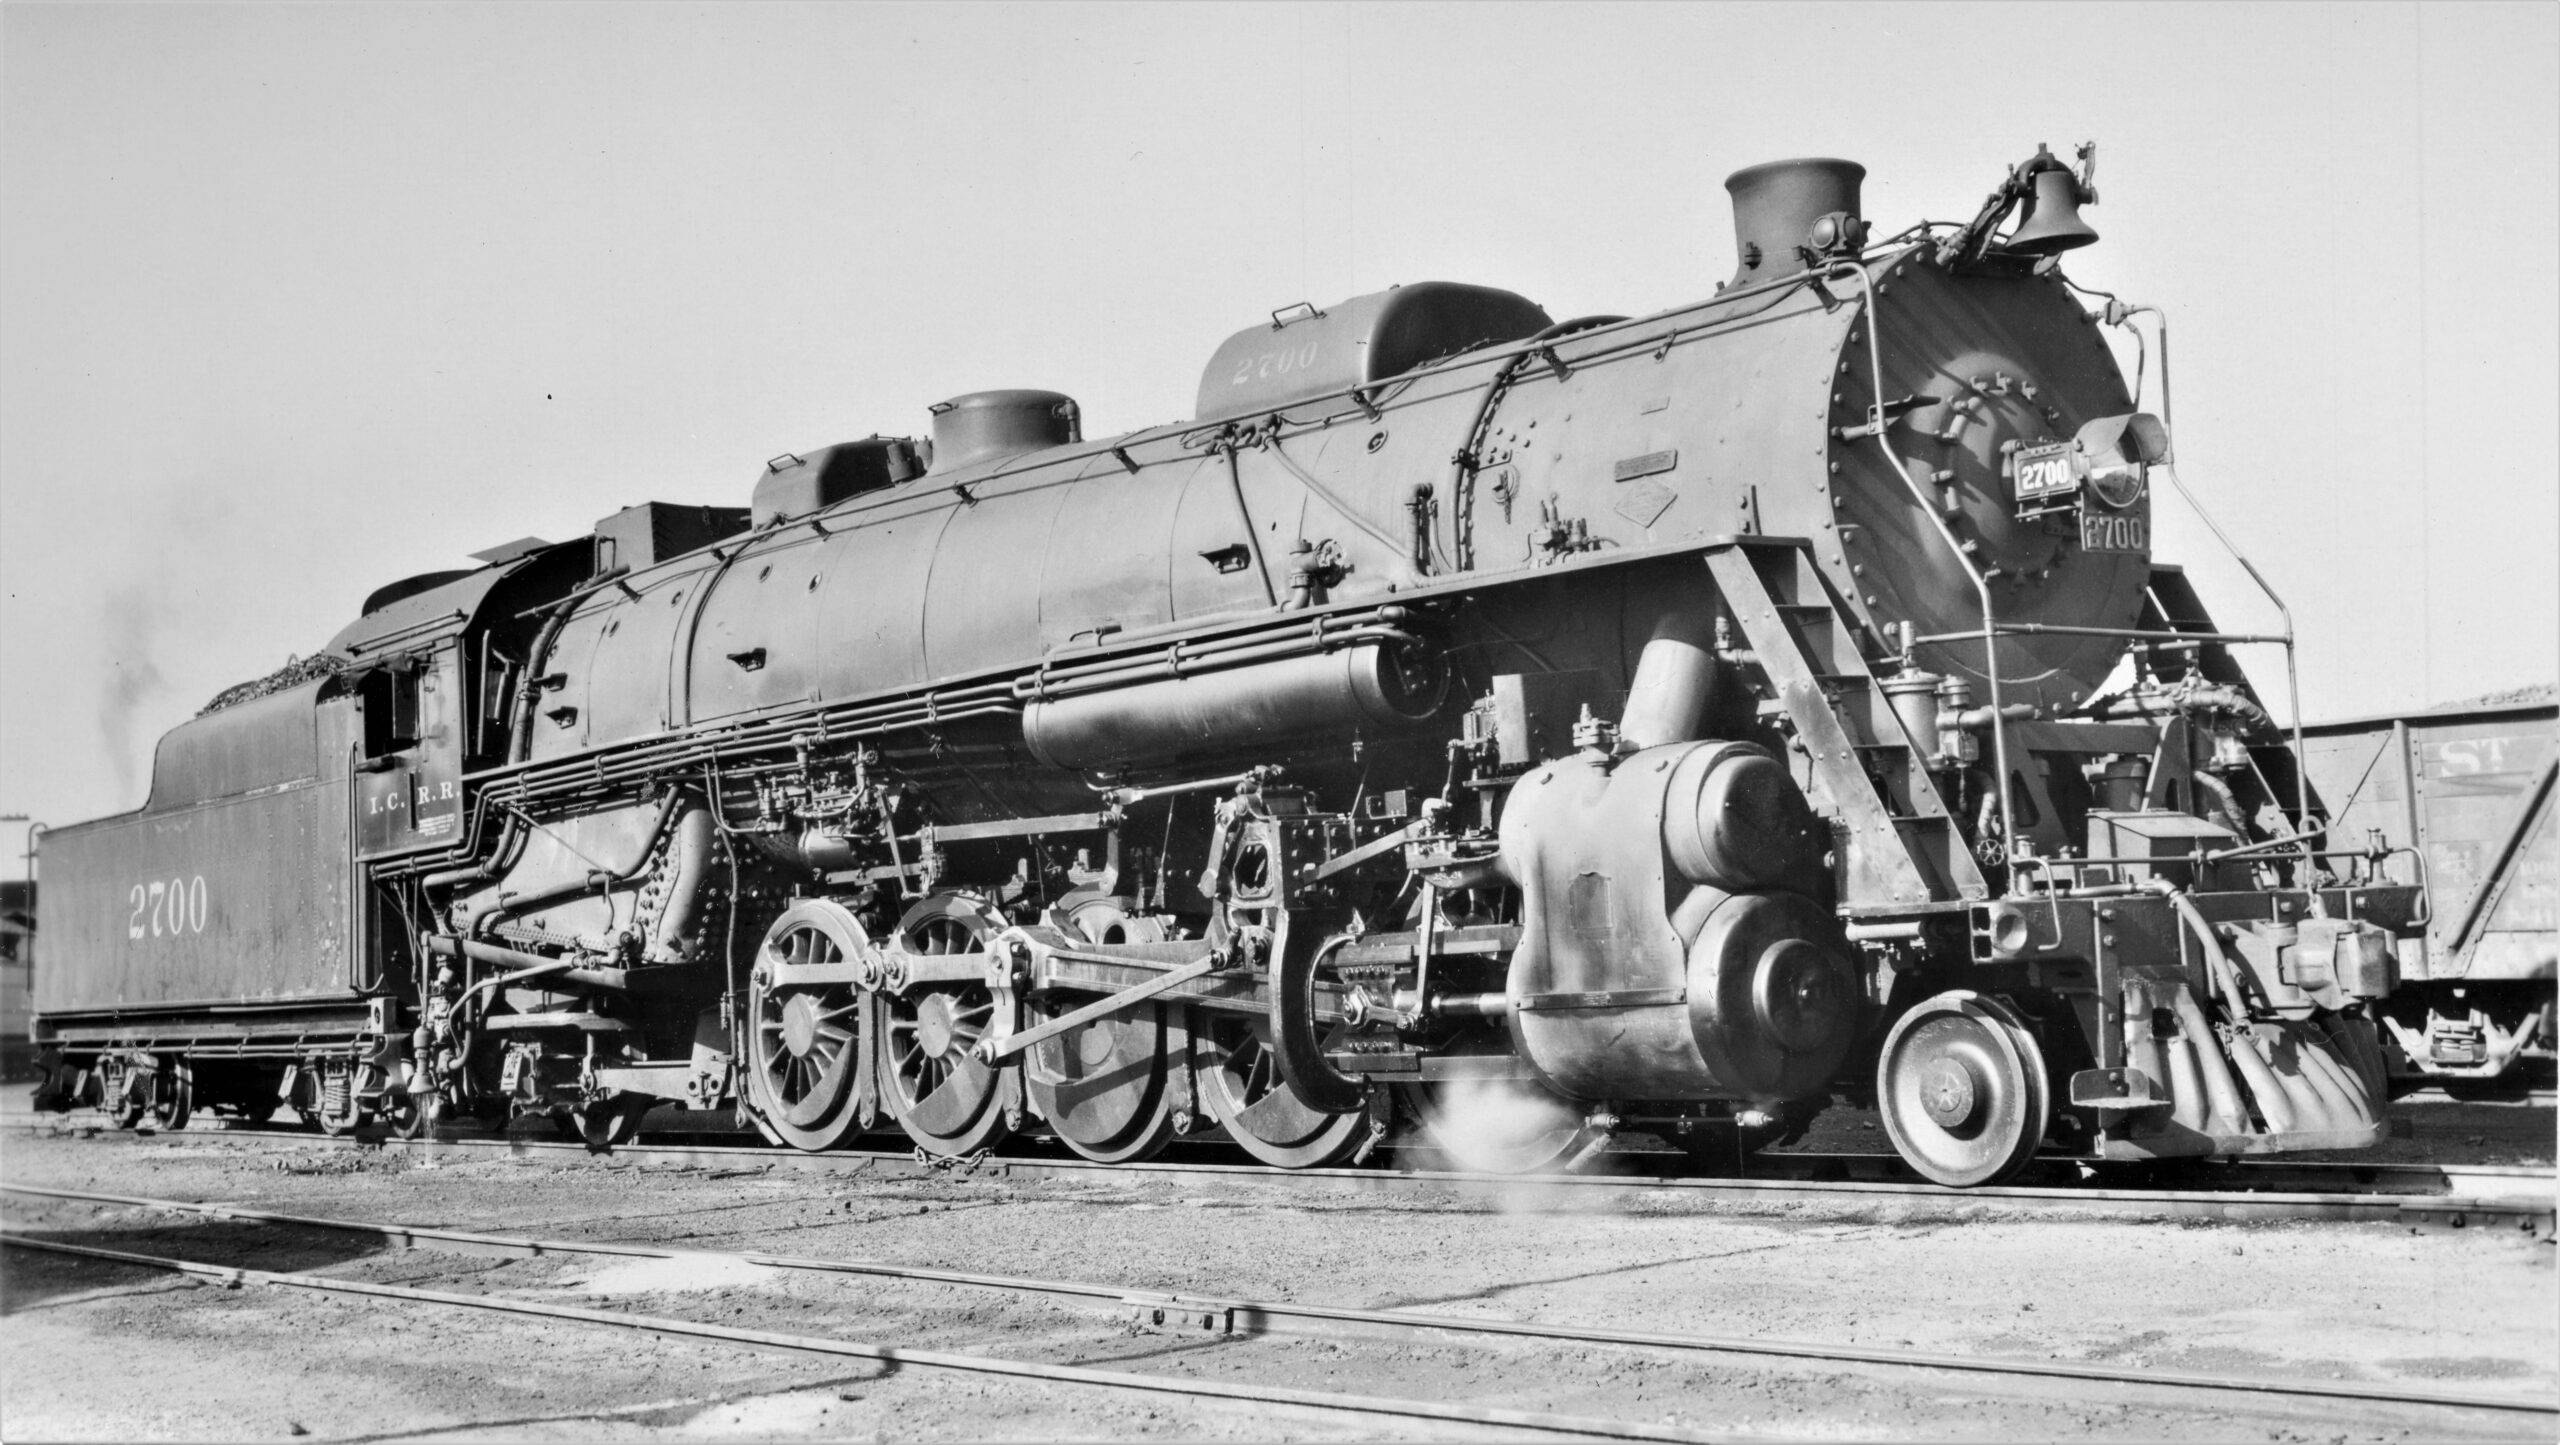 Illinois Central | East Saint Louis, Illinois | Class 2-10-2 #2700 steam locomotive | September 2, 1945 | Robert Morris Photo | Elmer Kremkow collection